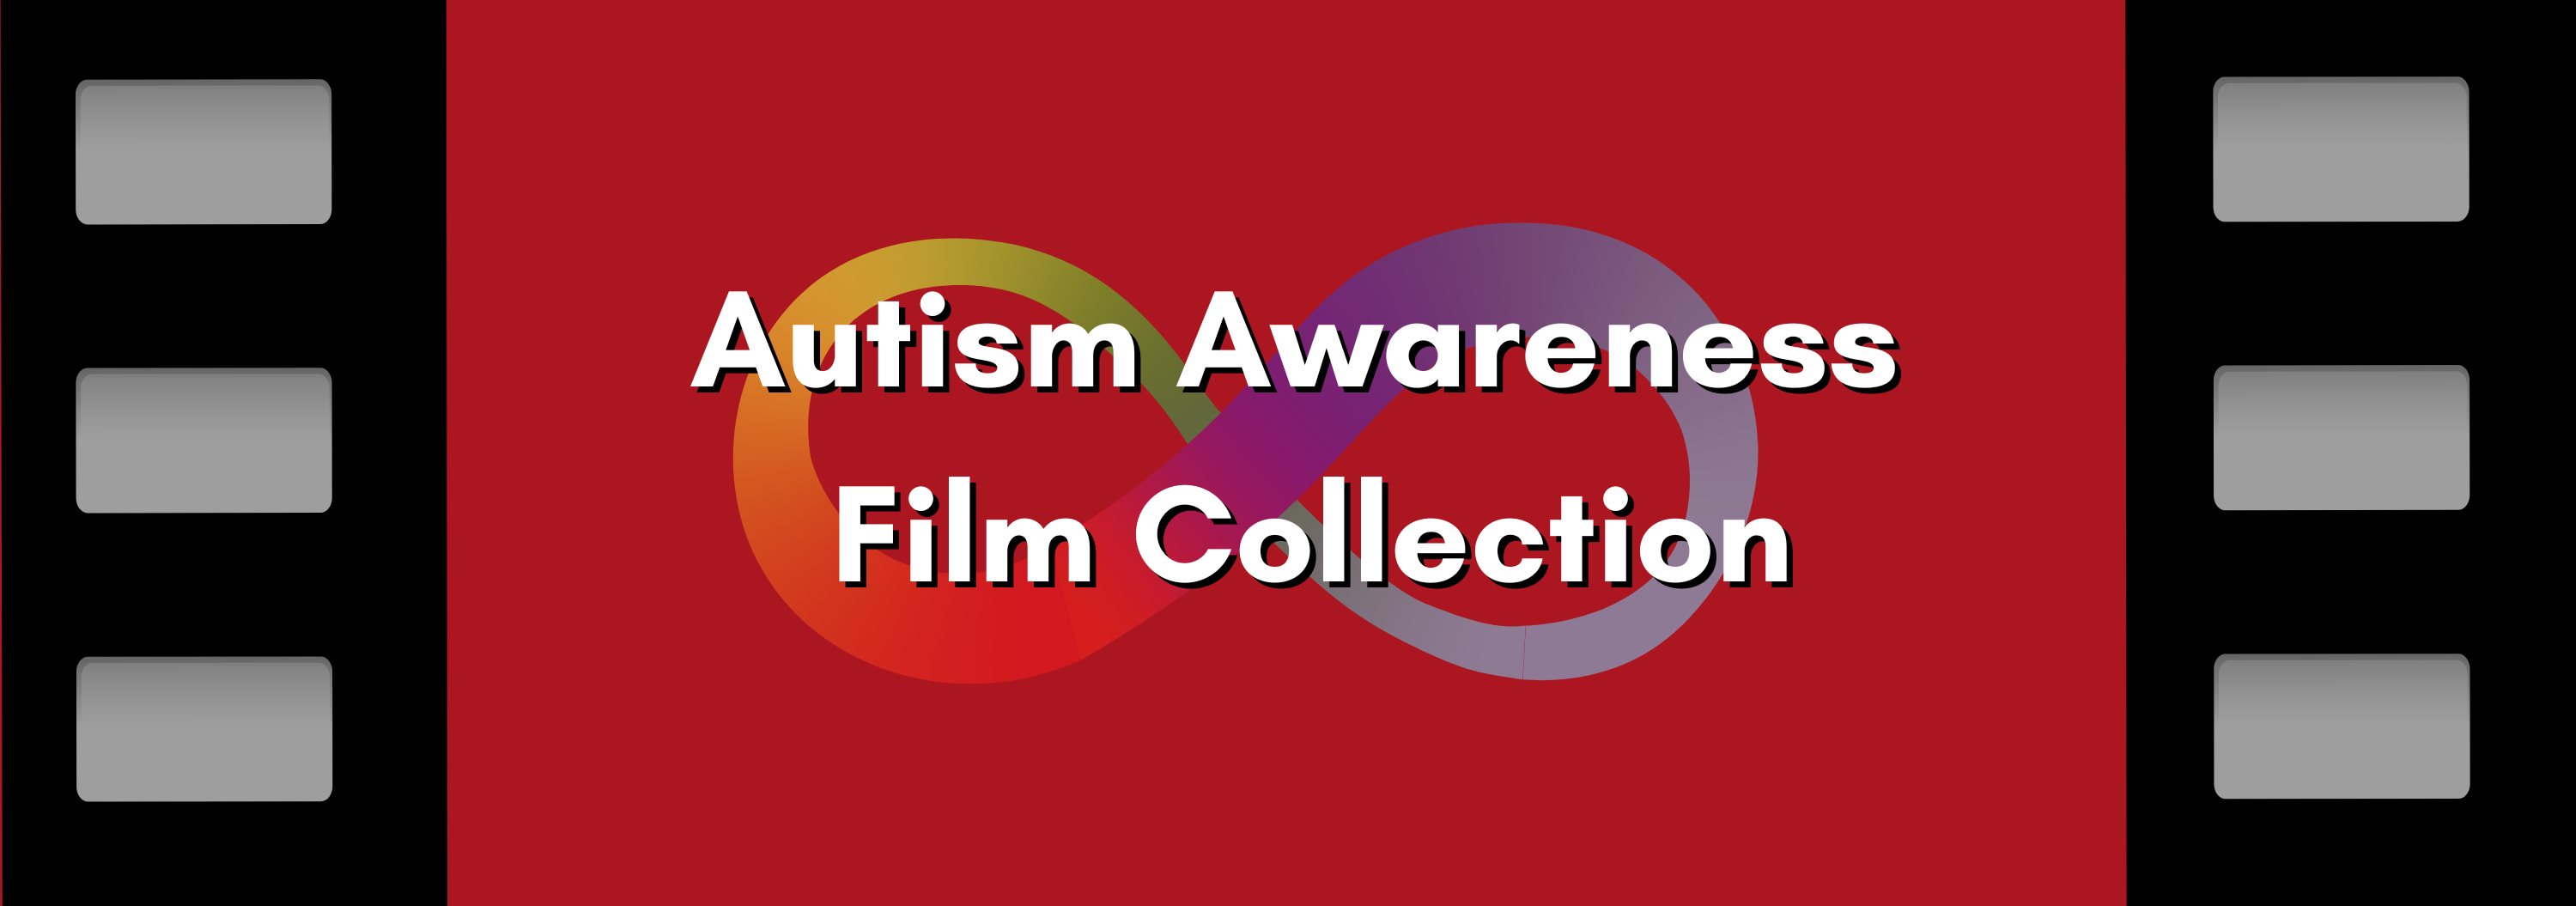 Autism Film Collection